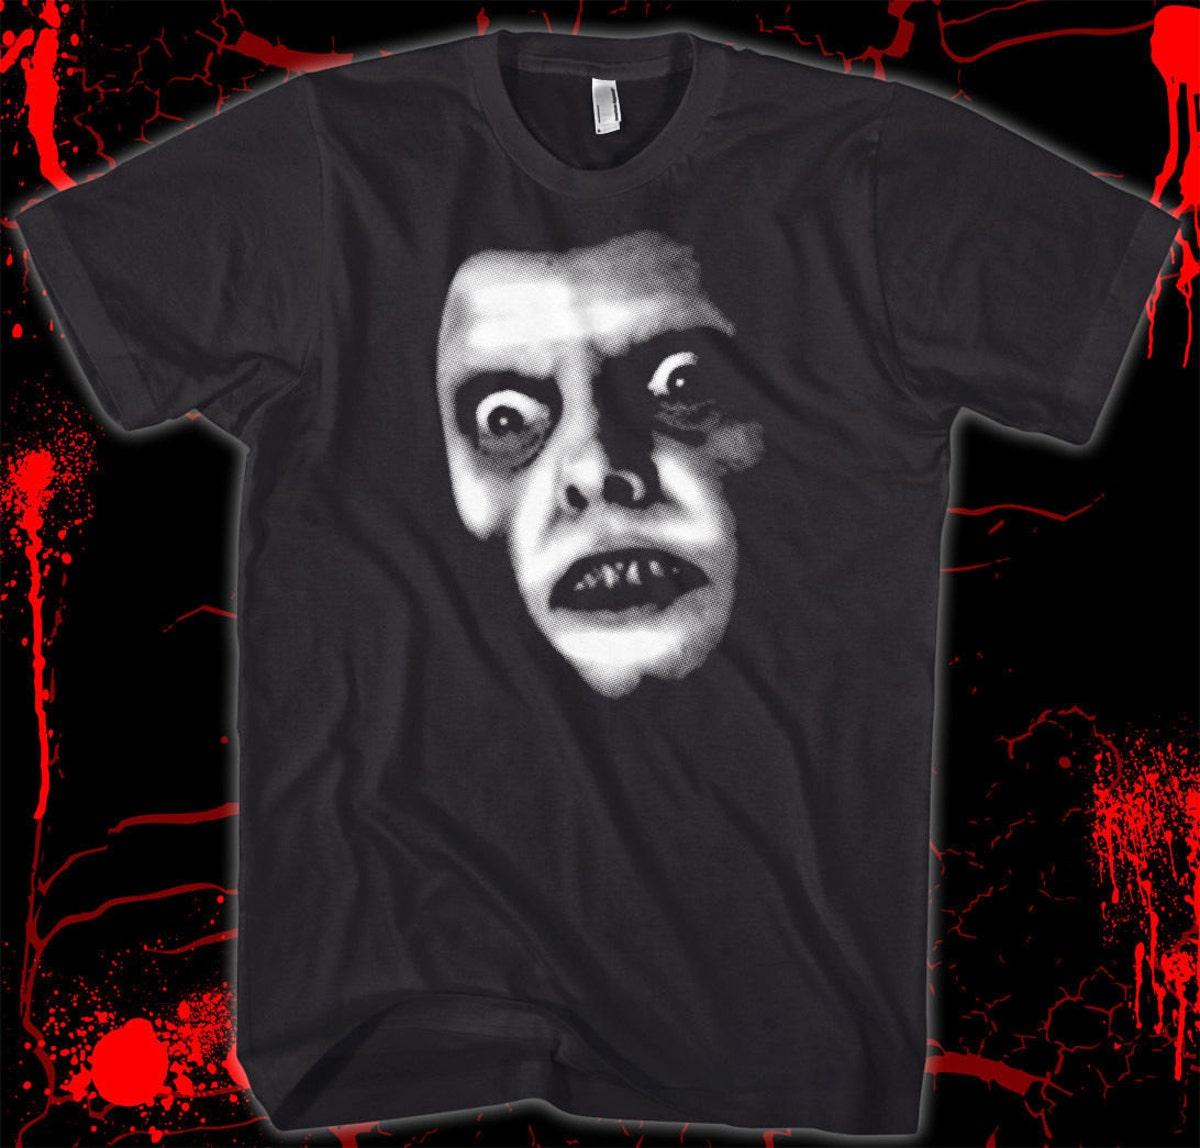 The Exorcist Series Captain Howdy Unisex T-shirt For Movie Fans